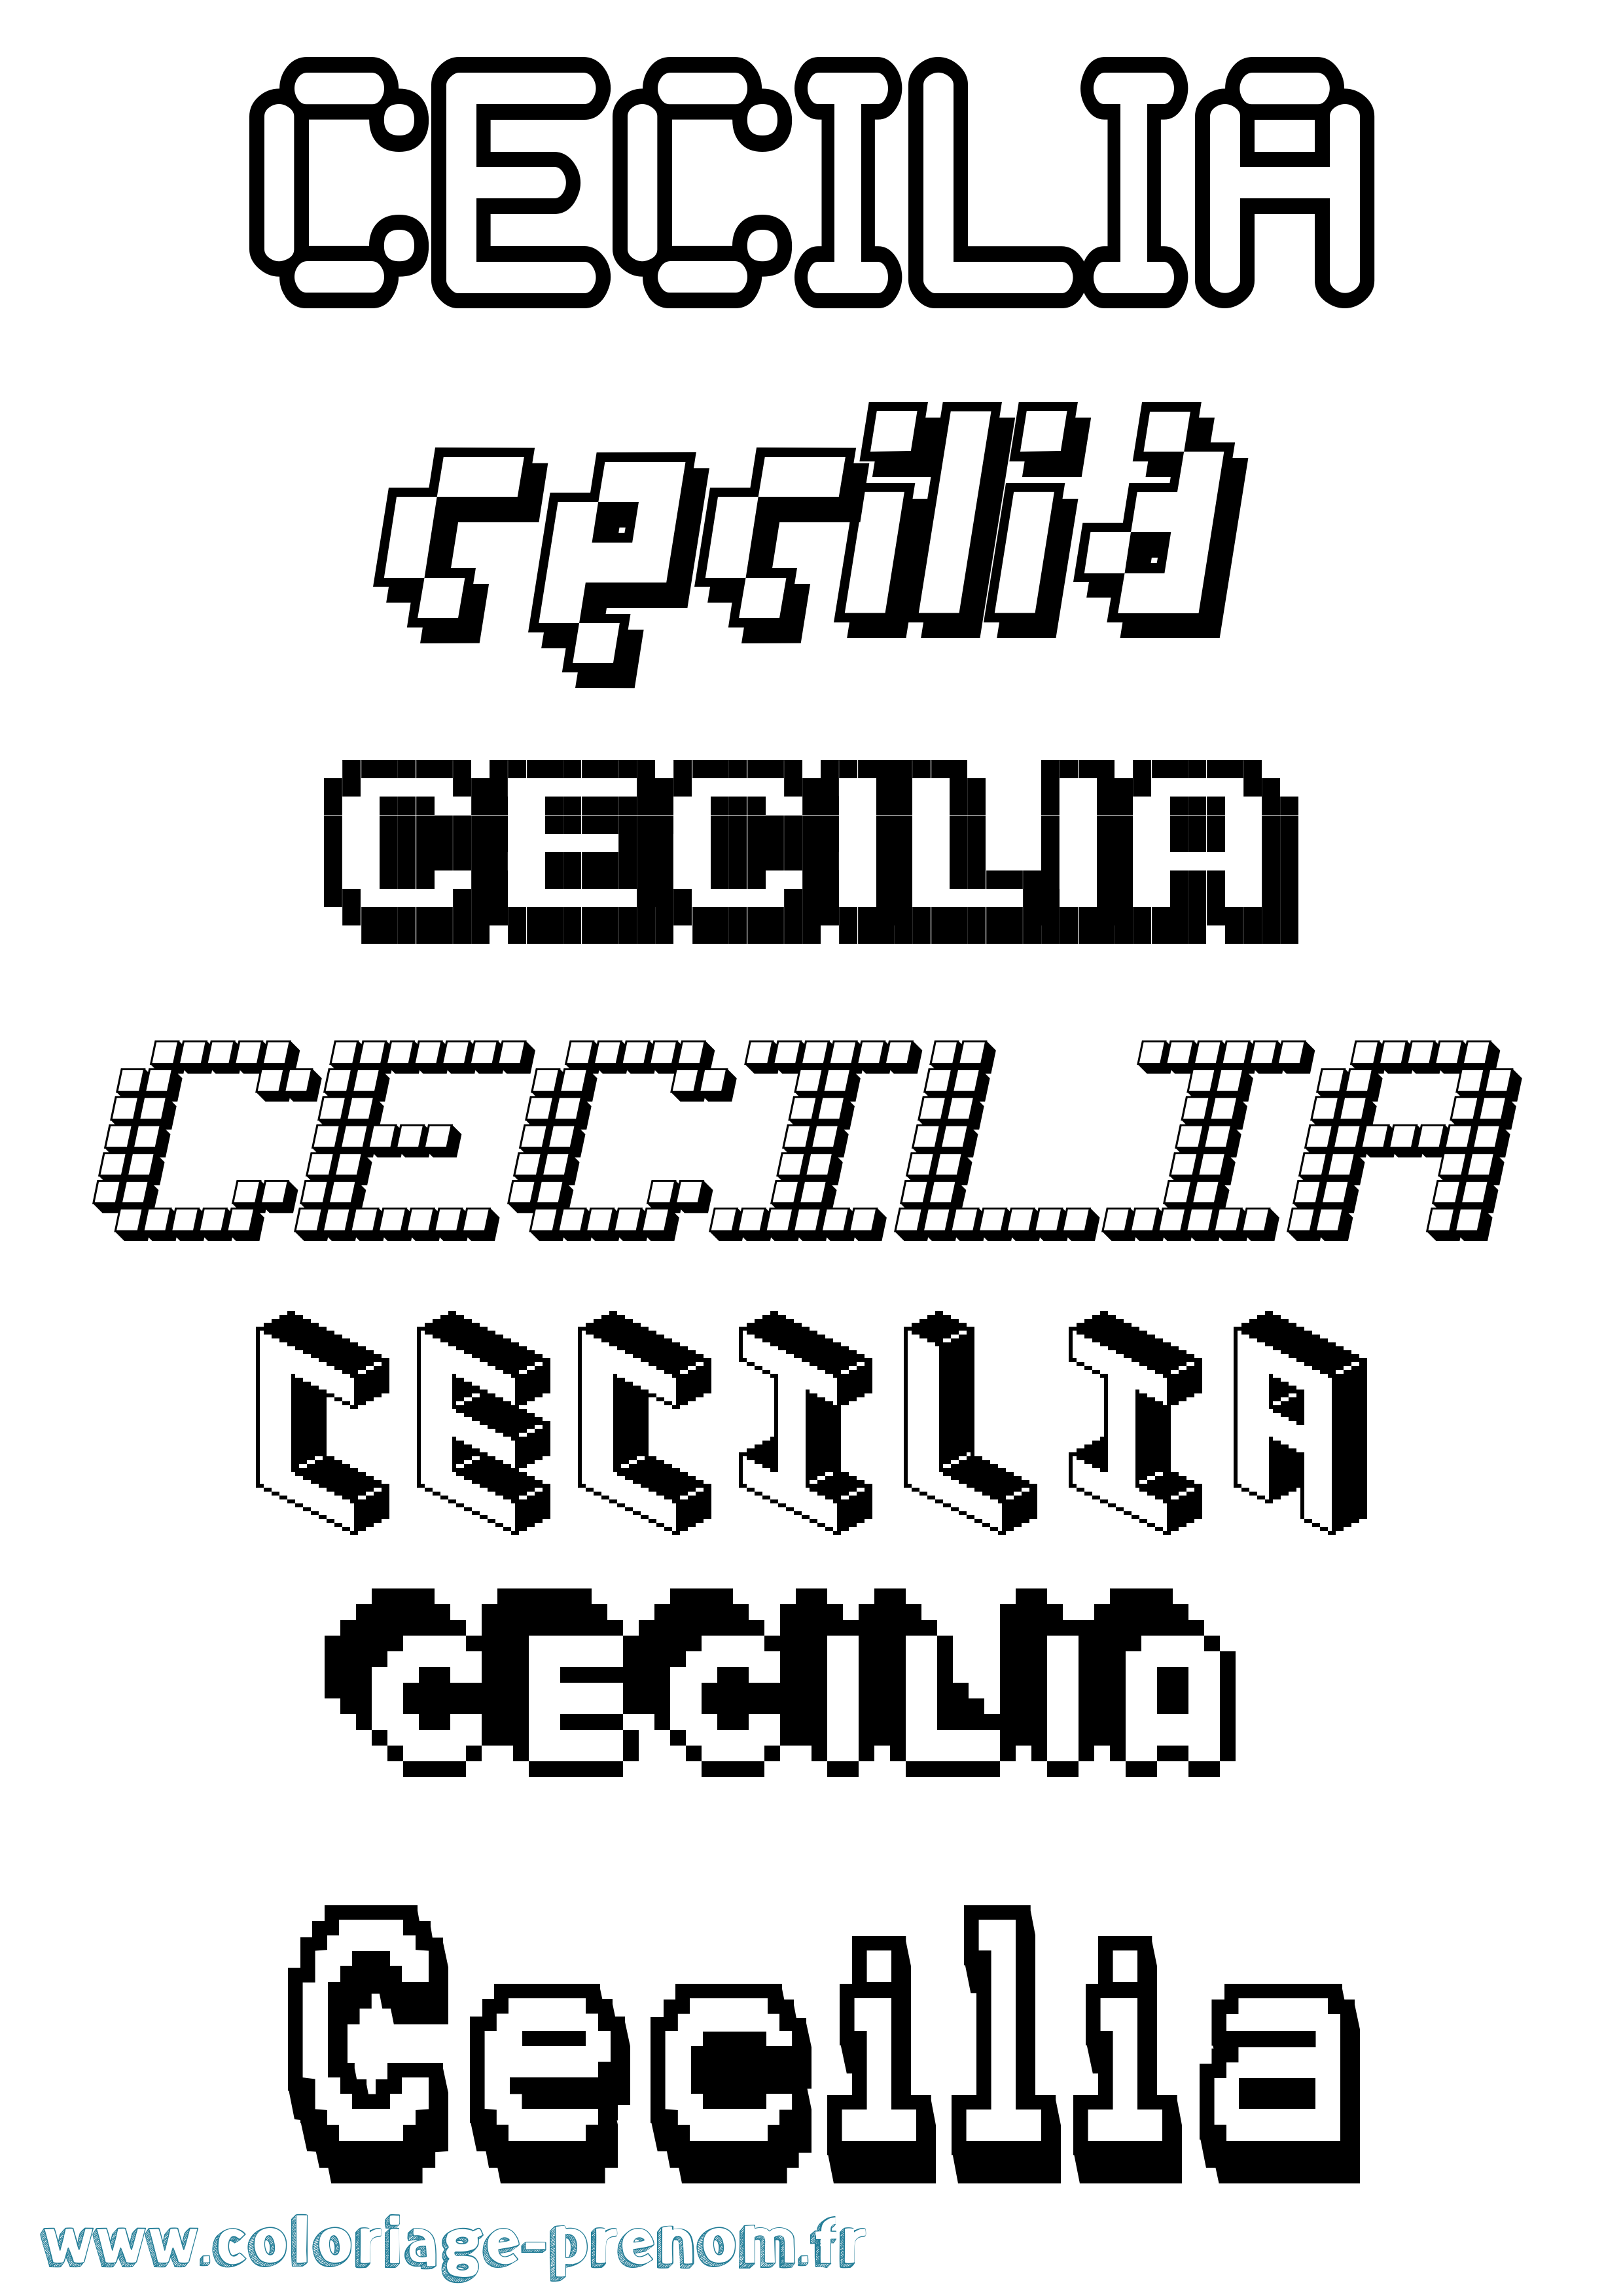 Coloriage prénom Cecilia Pixel